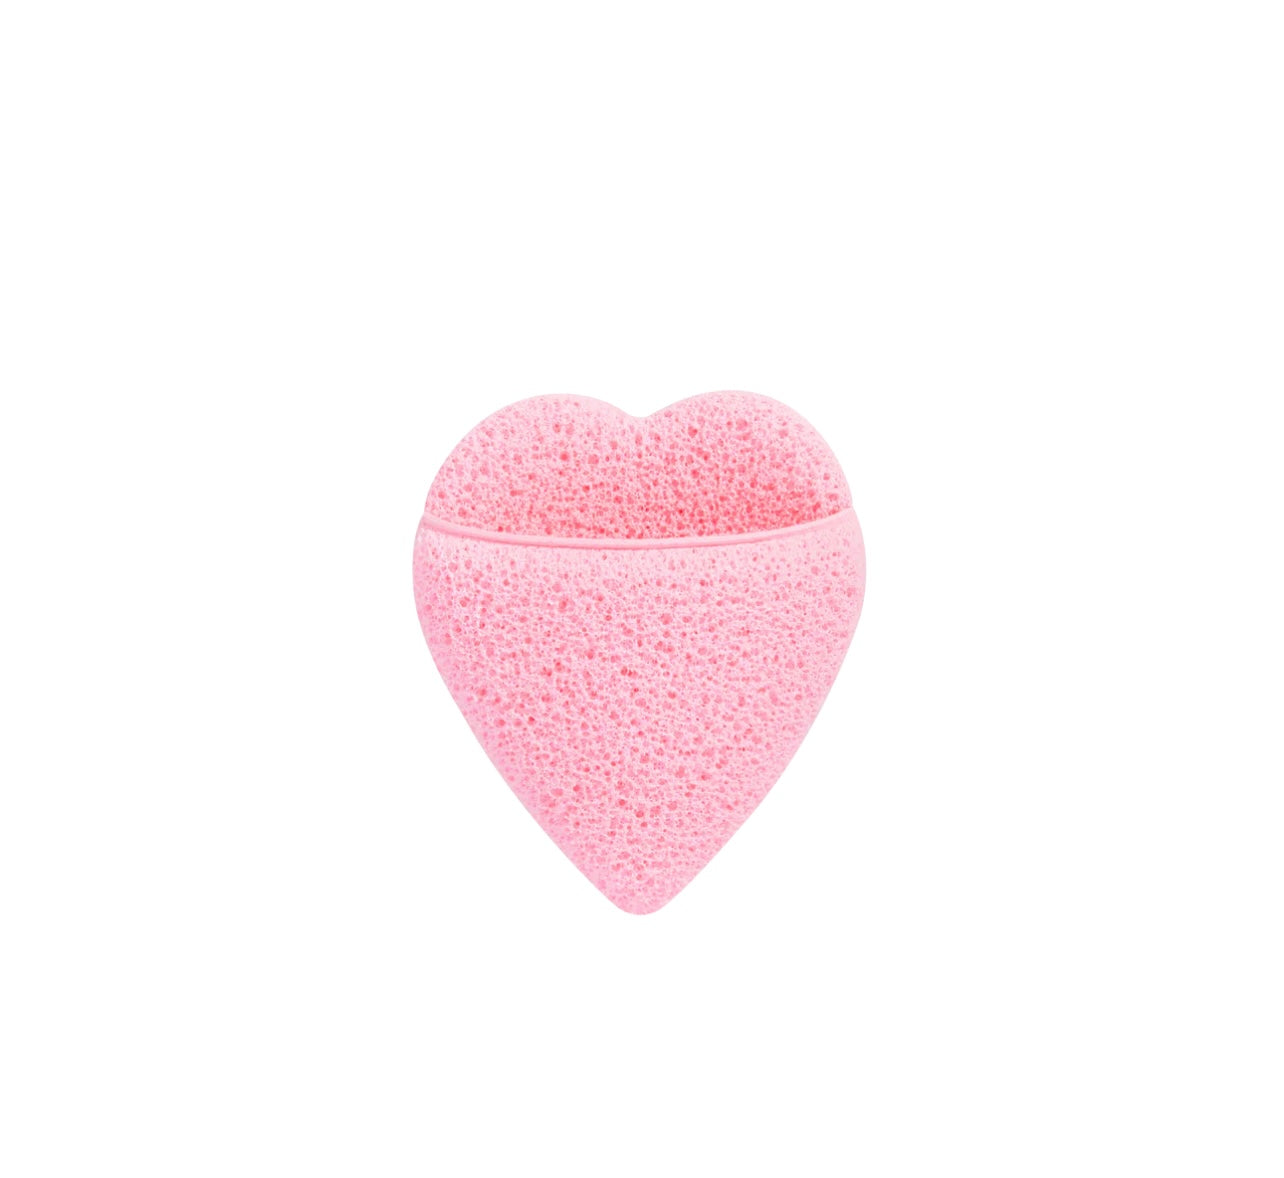 Bath Sponge Shape Heart Sponge Washing Stock Photo 1193246005